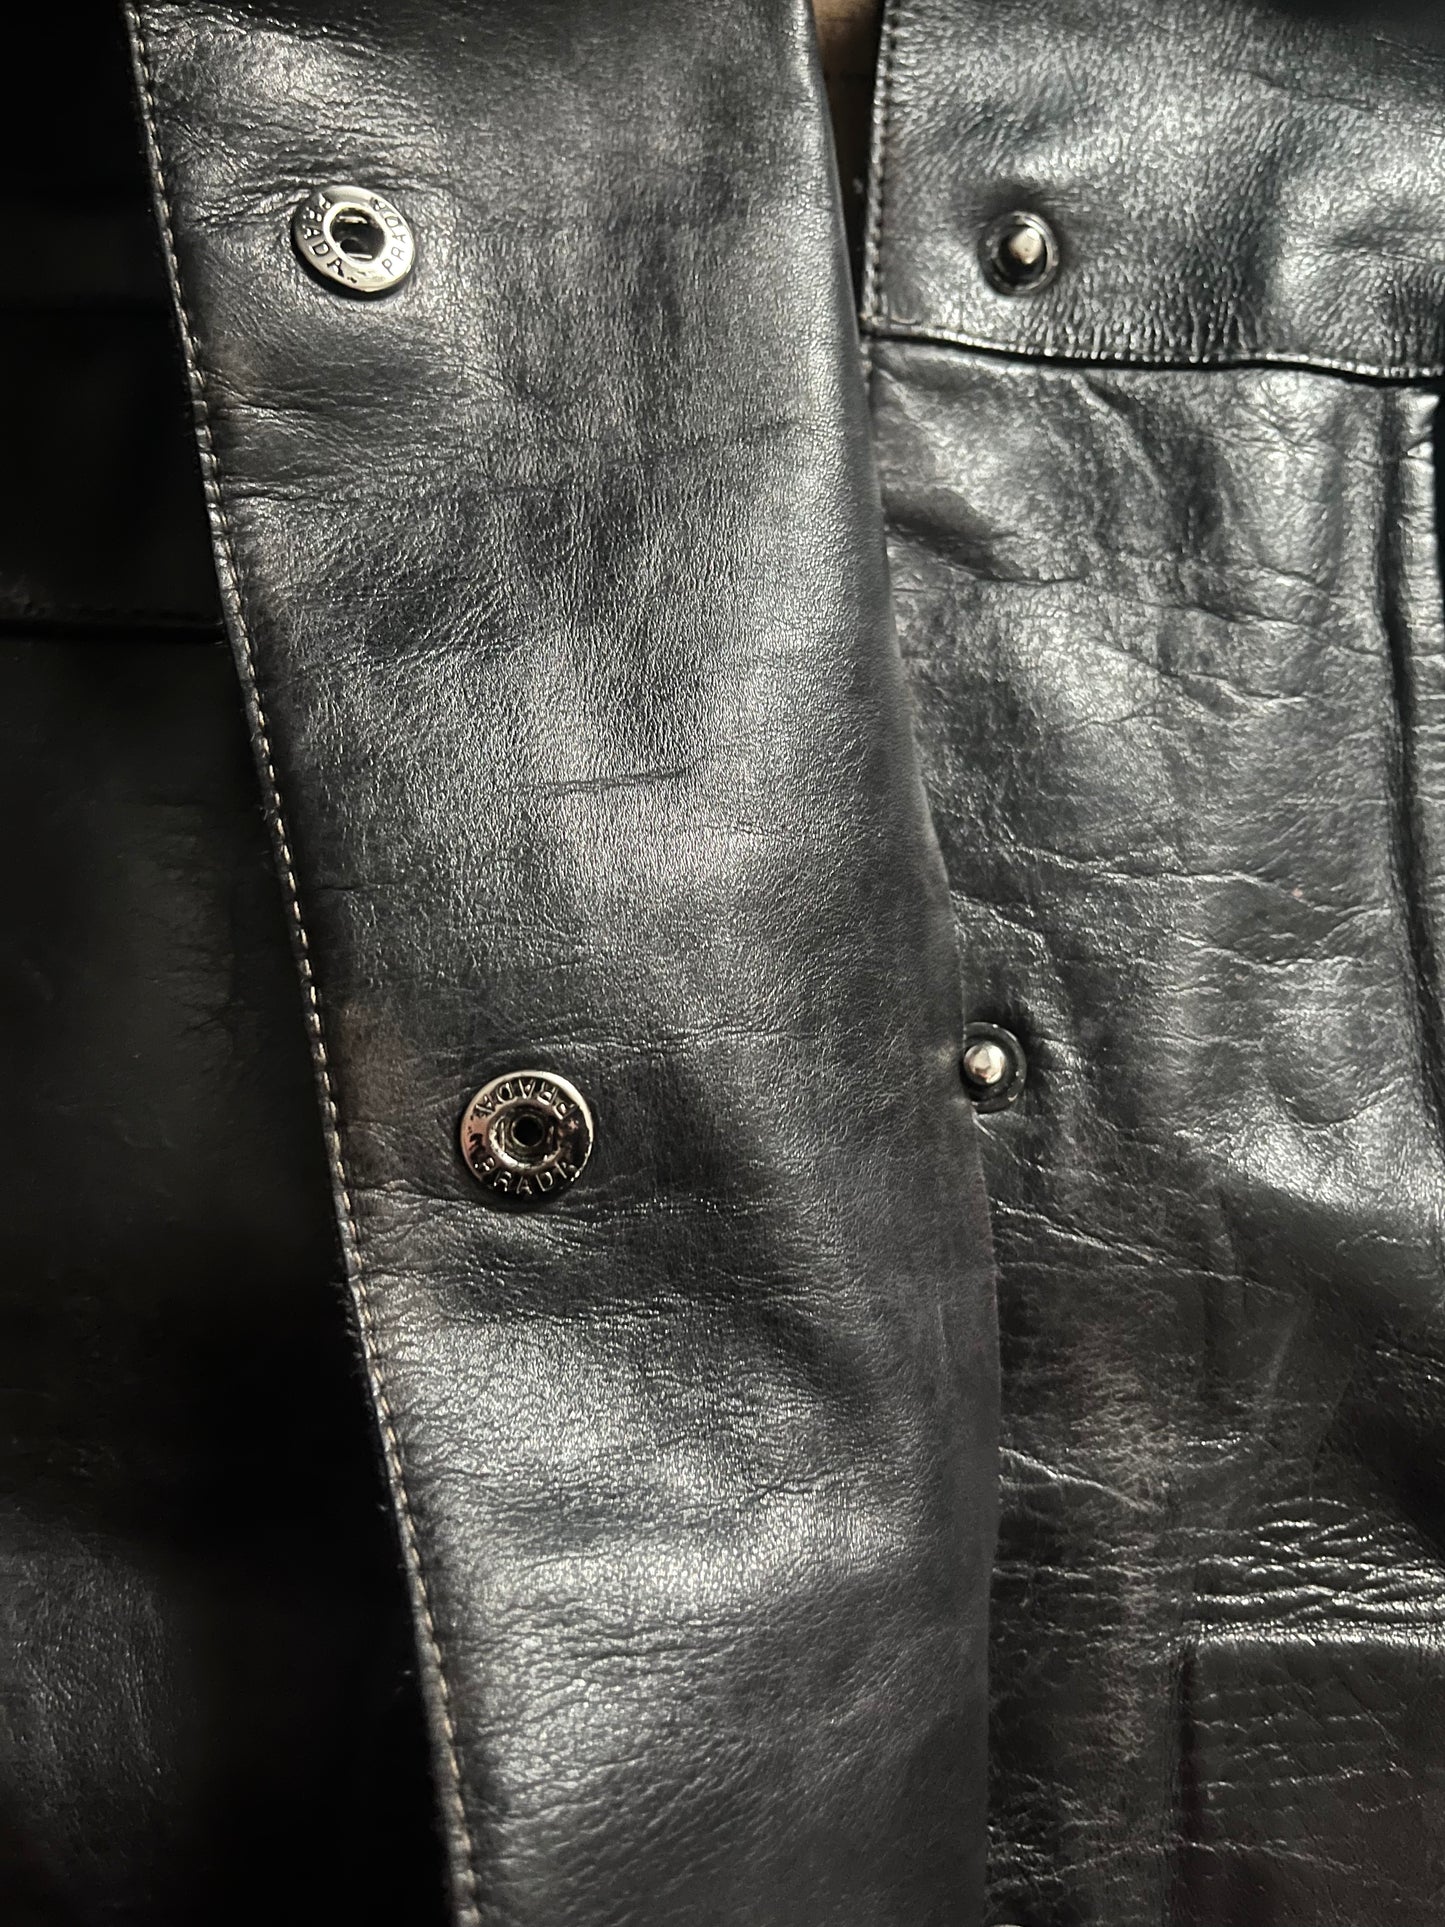 SS1999 Prada Leather Shadow Painted Jacket (XS)